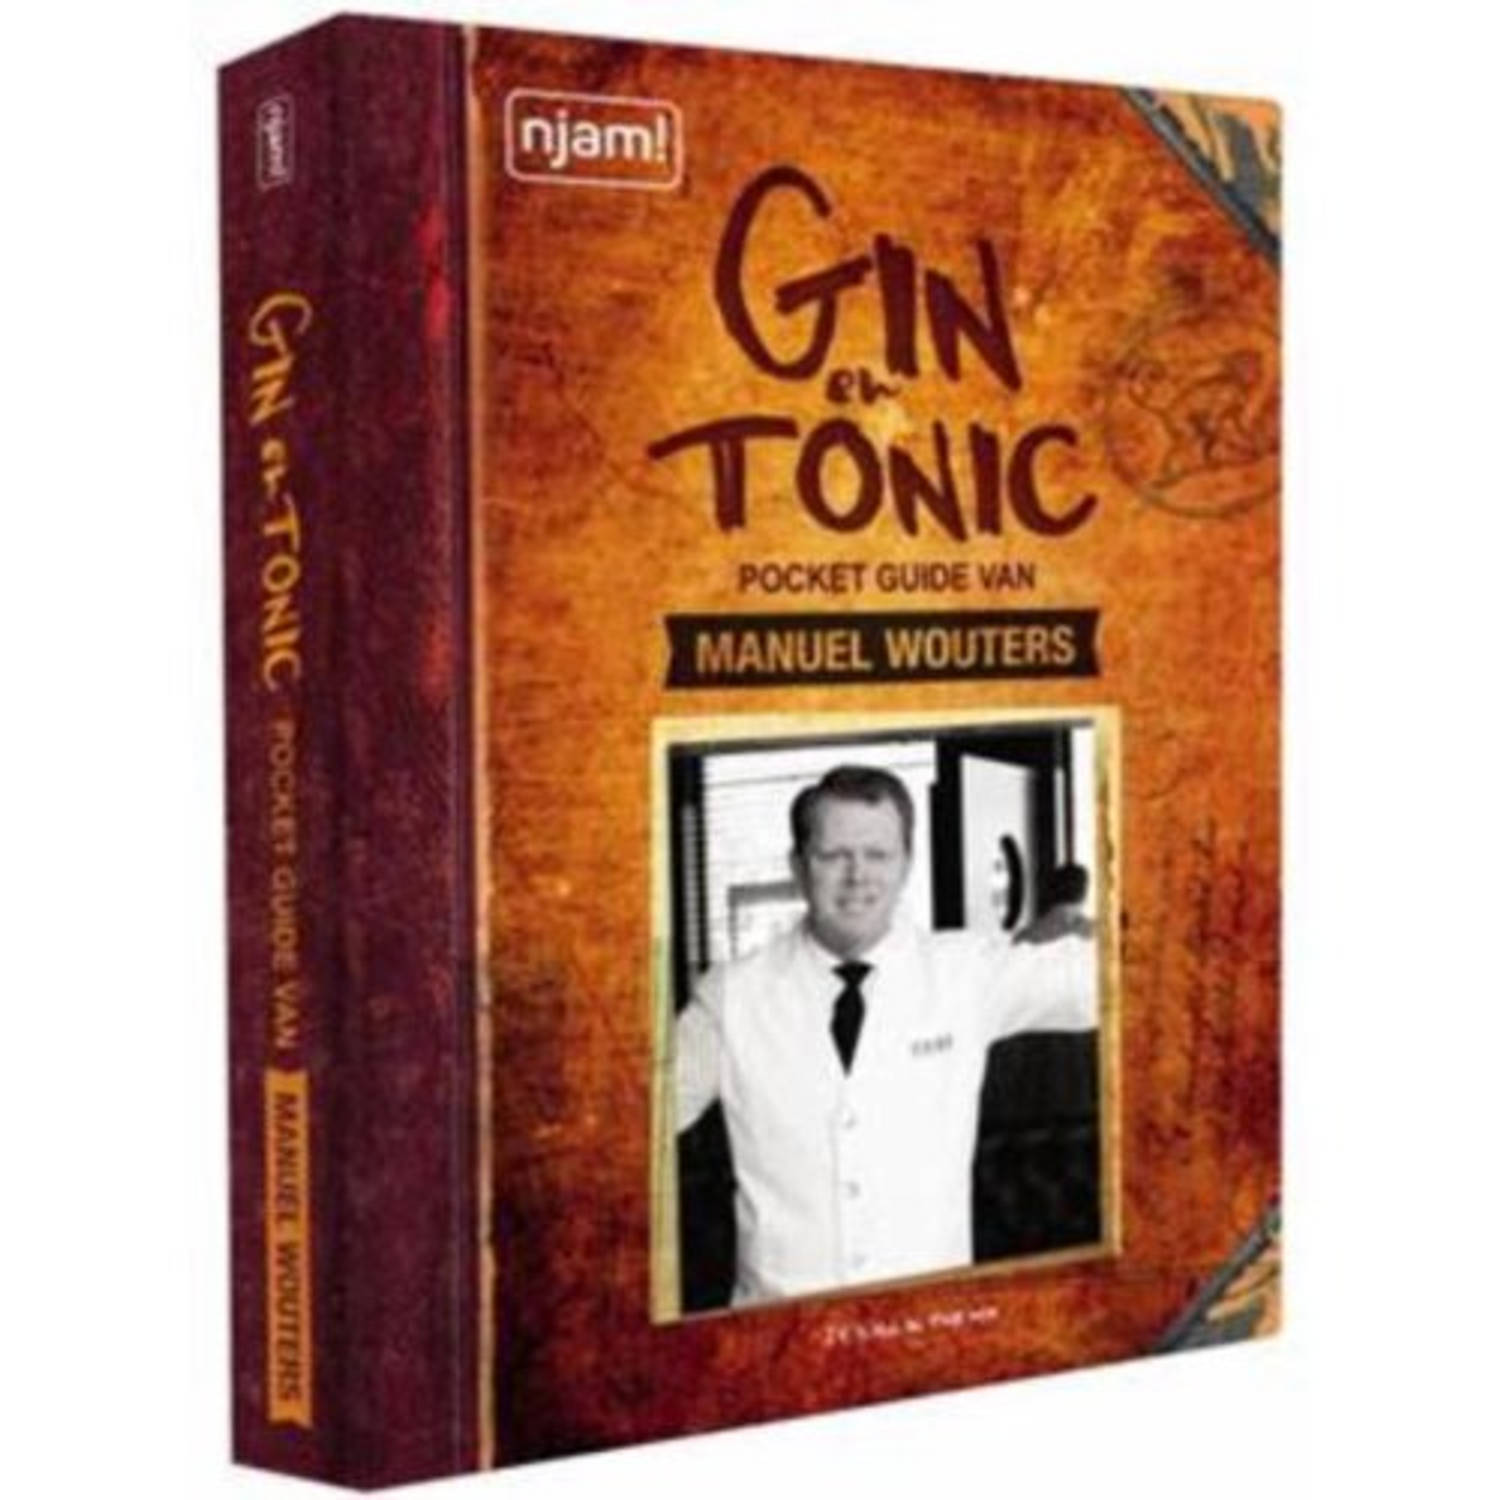 Gin En Tonic Pocketguide - Njam!